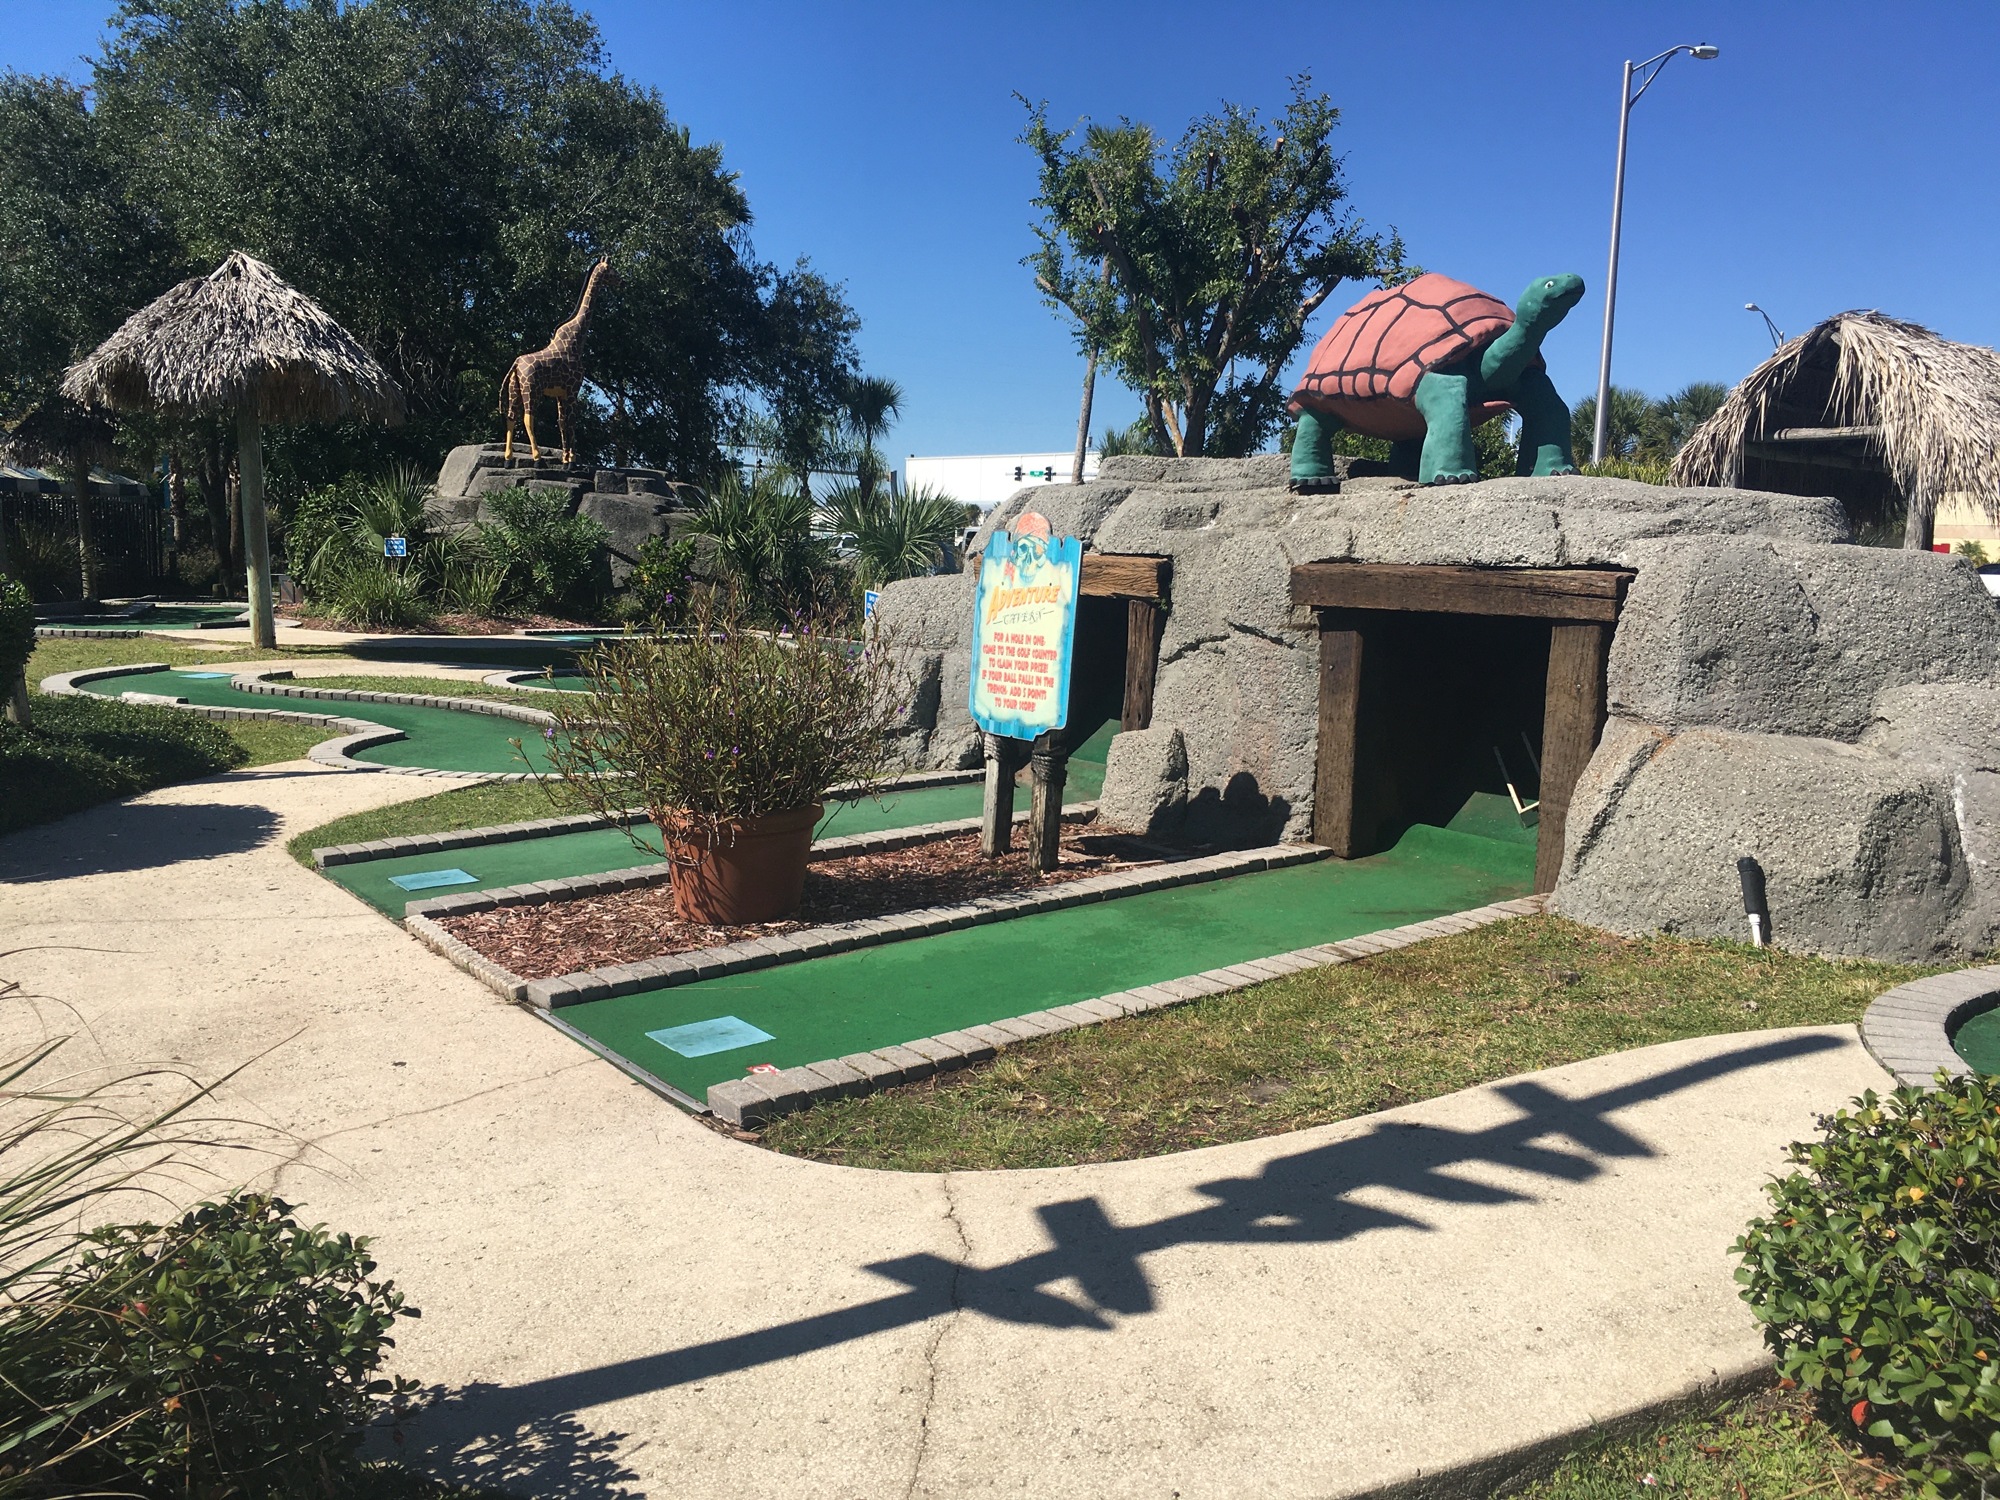 The miniature golf area at Adventure Landing.